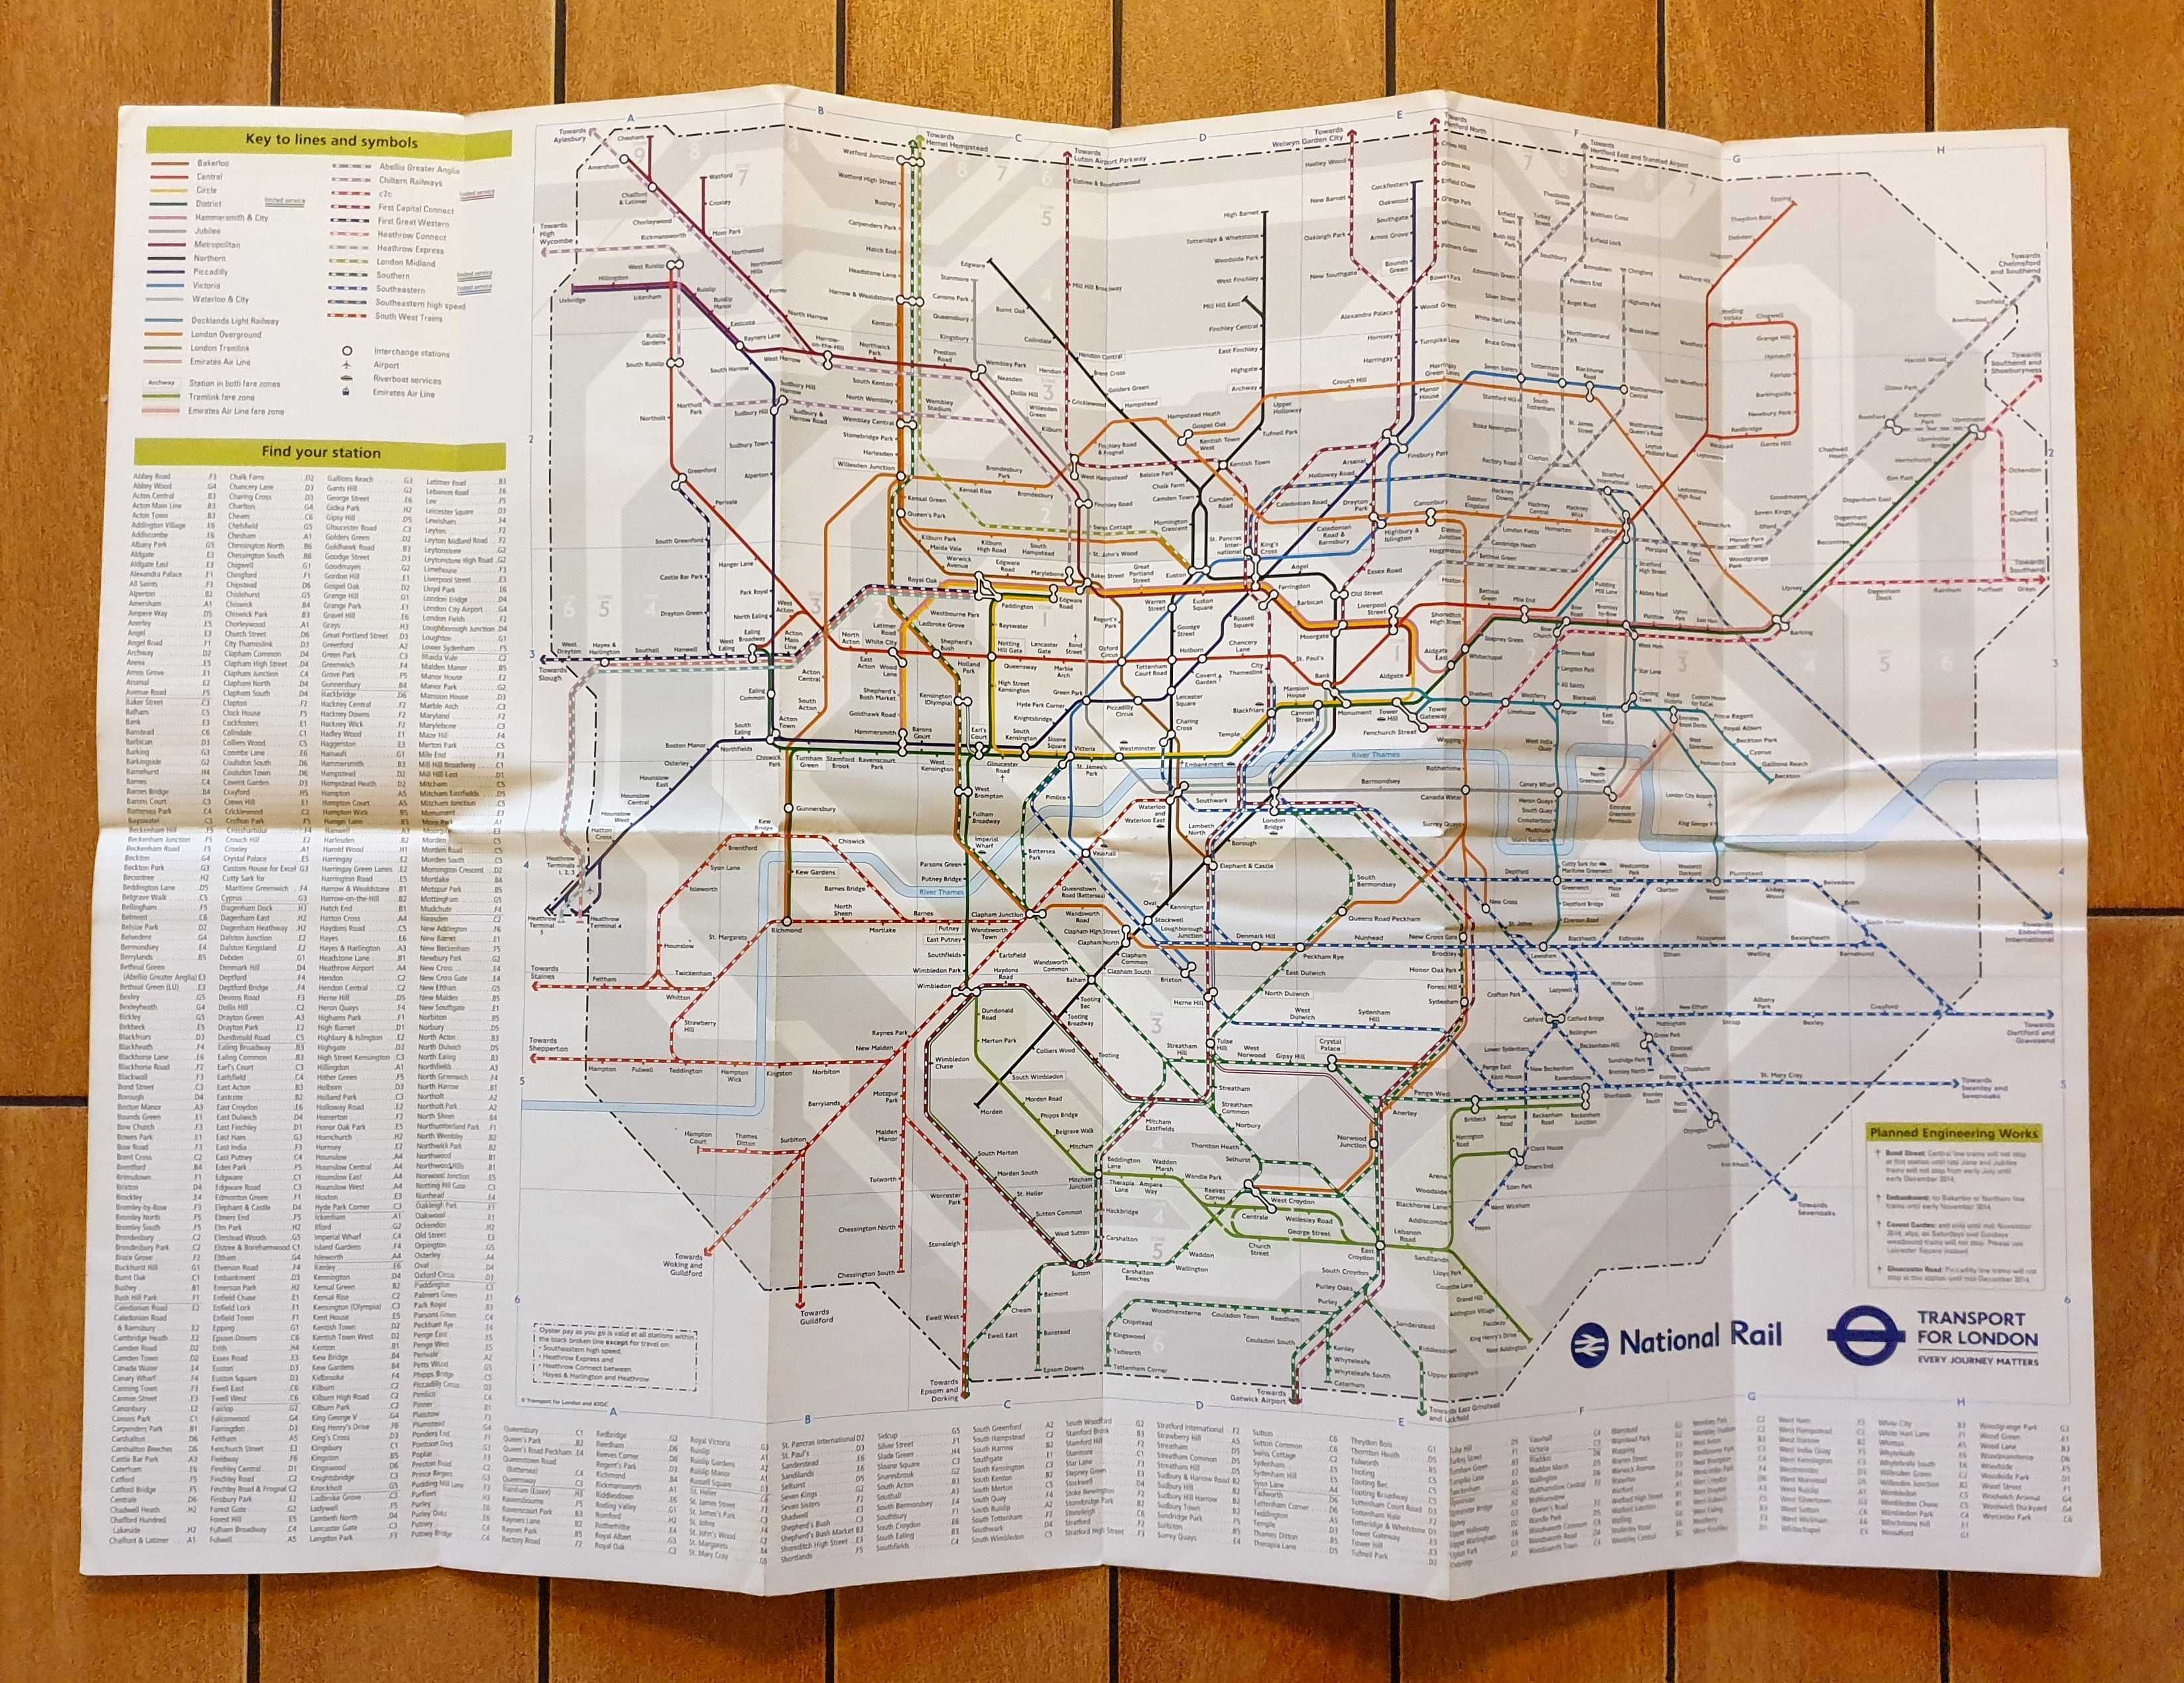 London's Rail & Tube (Plan Metra Londyńskiego)